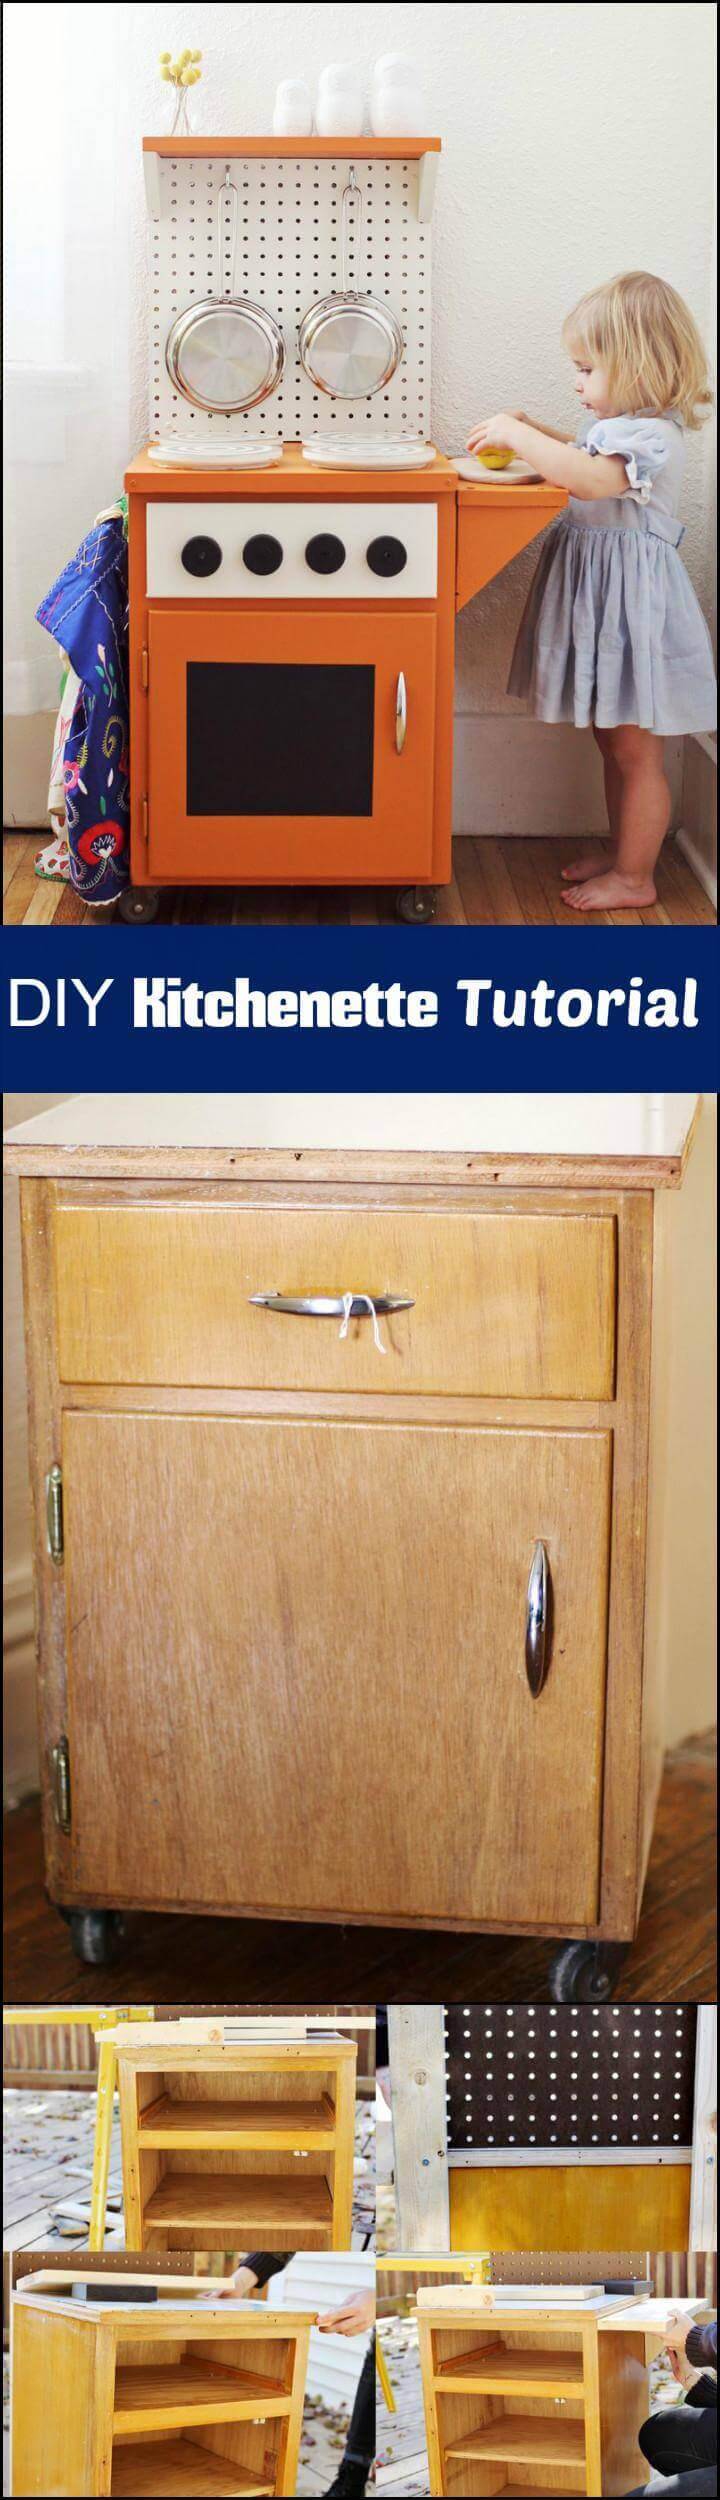 DIY handmade kitchenette tutorial